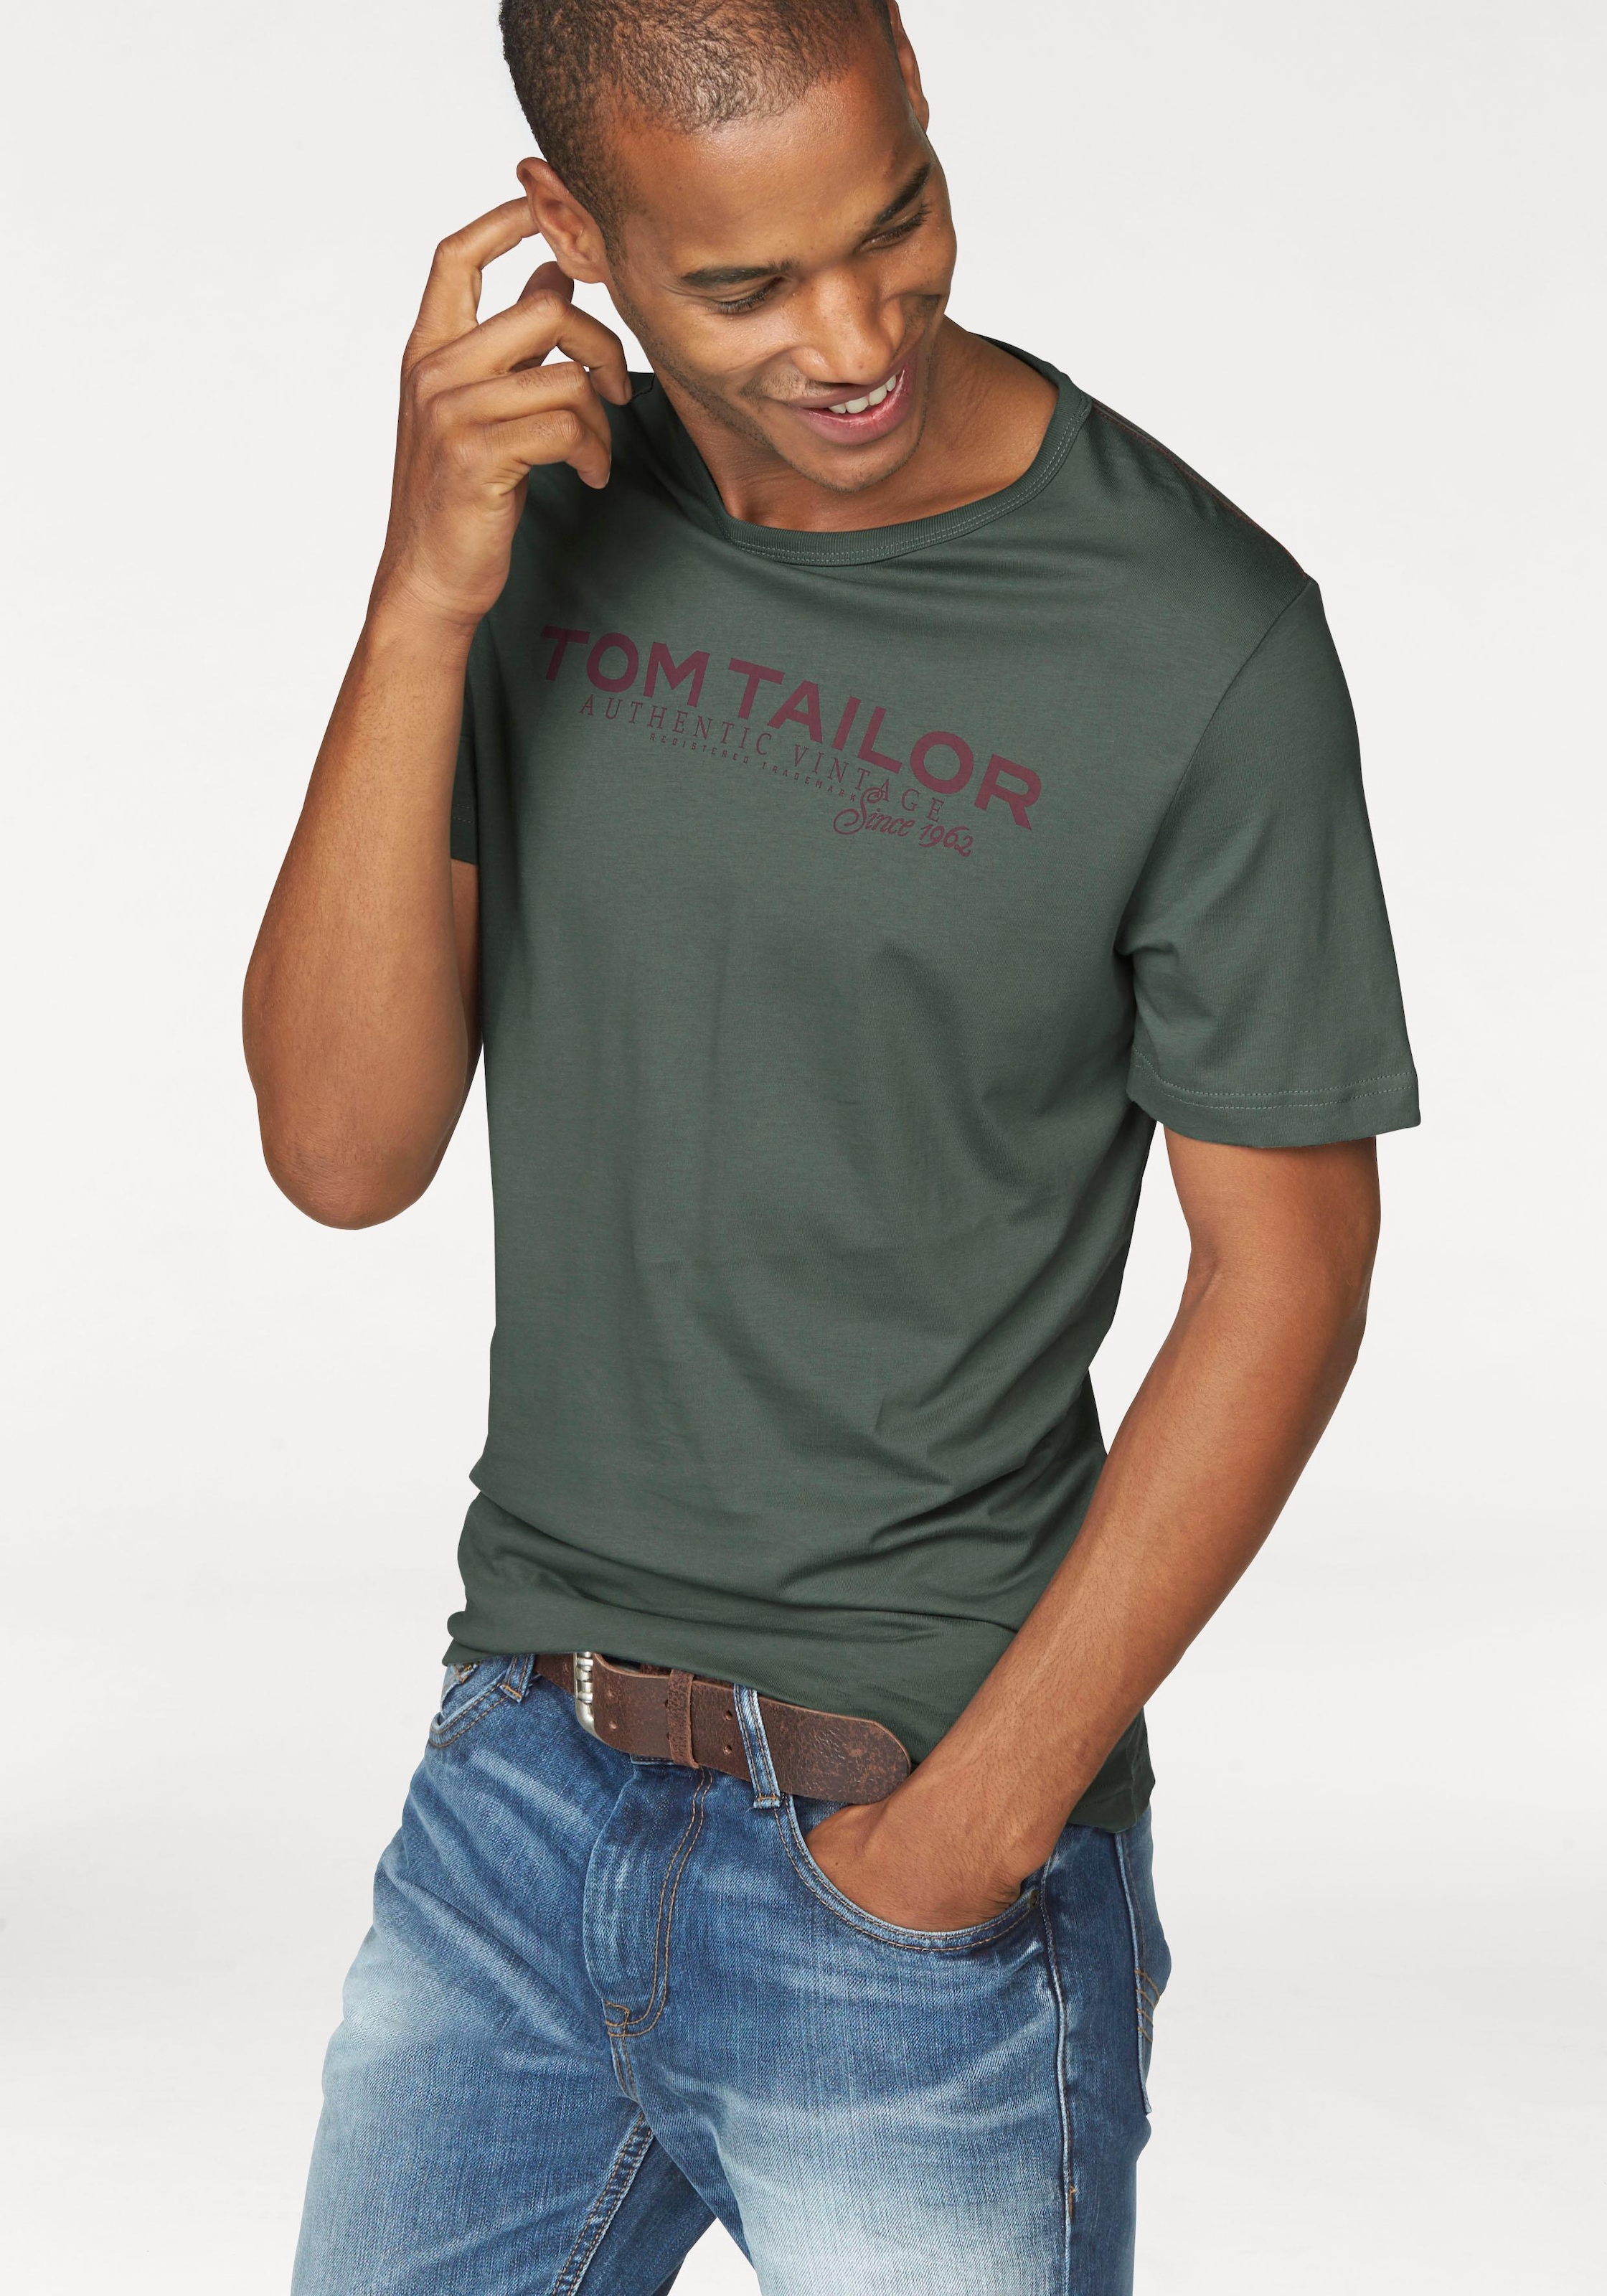 TAILOR TOM T-Shirt, Logoprint mit